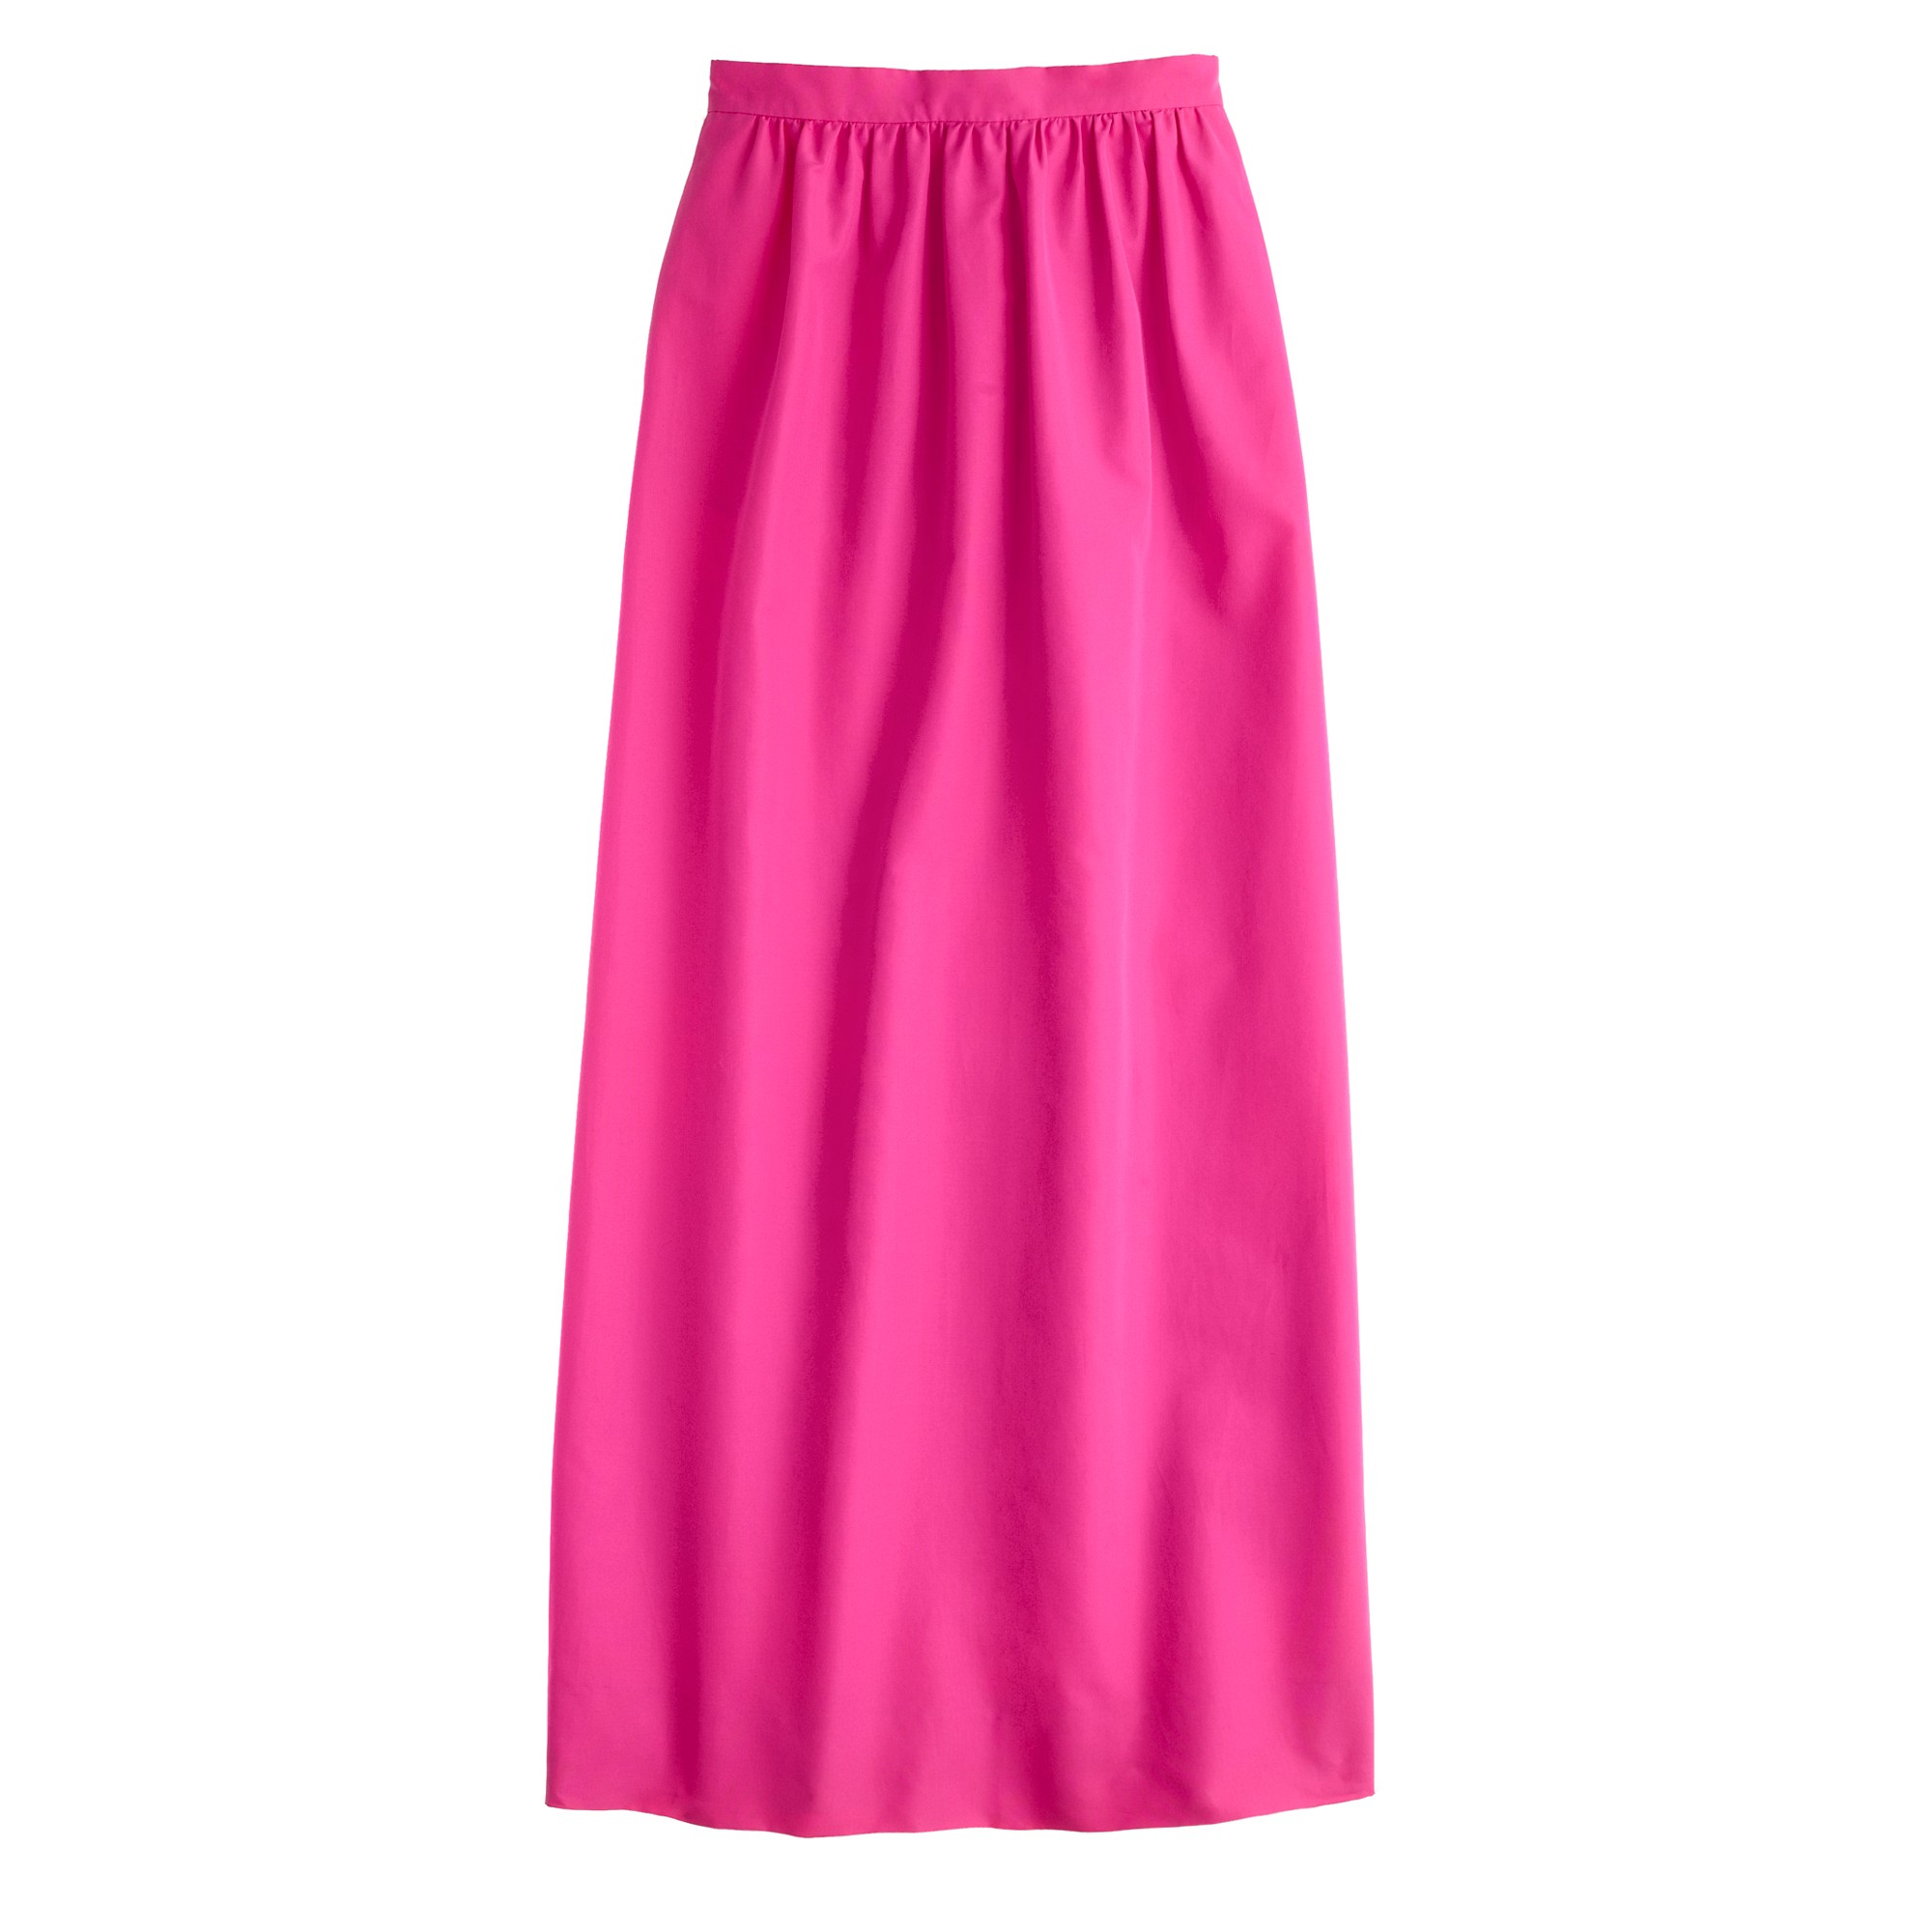 J.crew Pre-order Shirred Maxiskirt in Pink | Lyst